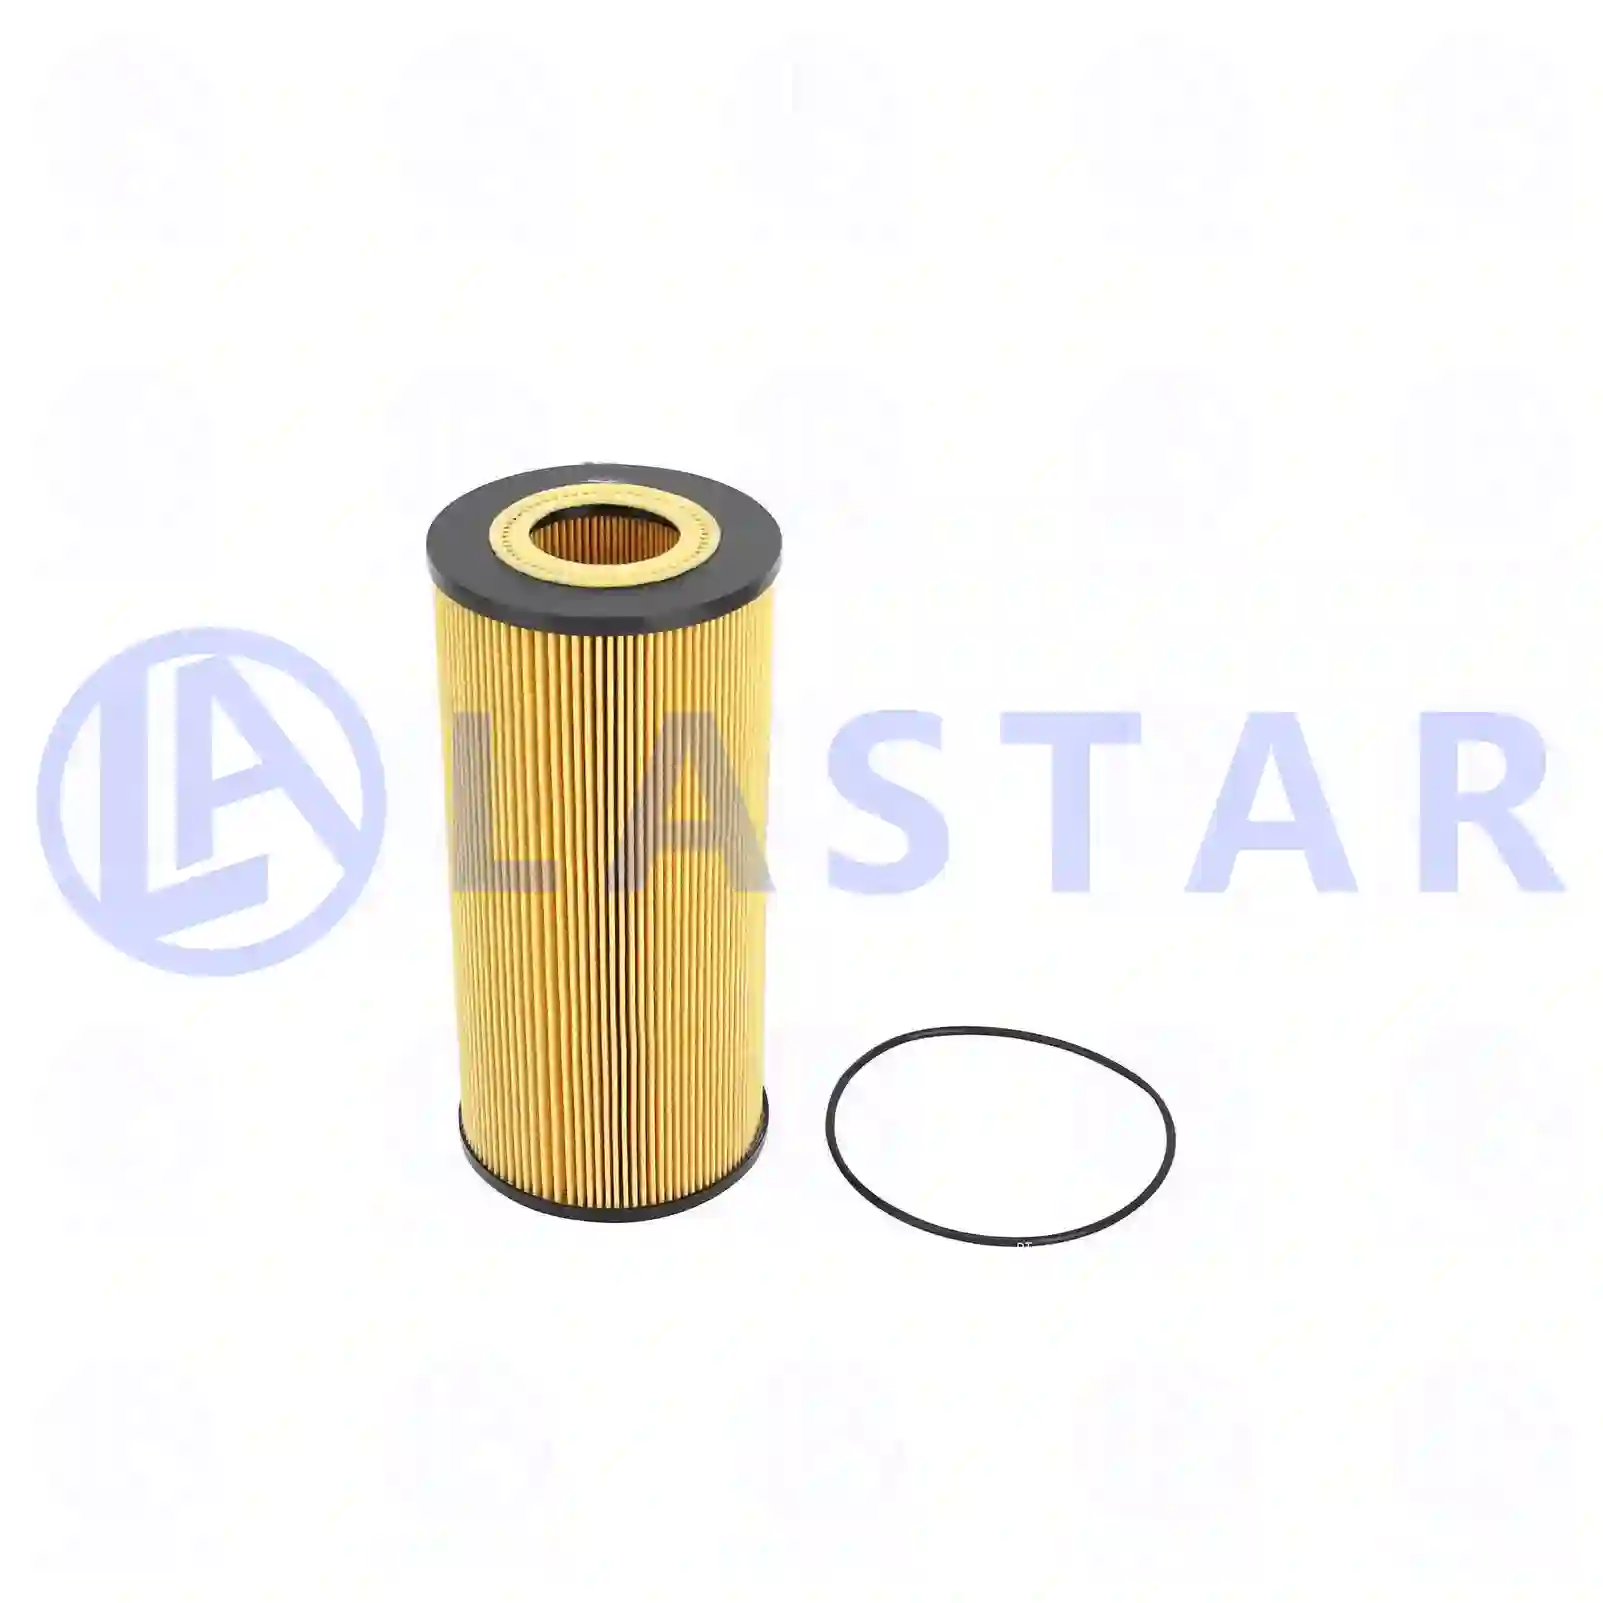 Oil Filter Oil filter insert, la no: 77700455 ,  oem no:0001420640, ABPN10GLF16046, 263J107001, 2191P550769, CH9558, 0001802109, 0001802909, 4571840125, 6861800209, 83120970180, 85114072, ZG01740-0008 Lastar Spare Part | Truck Spare Parts, Auotomotive Spare Parts